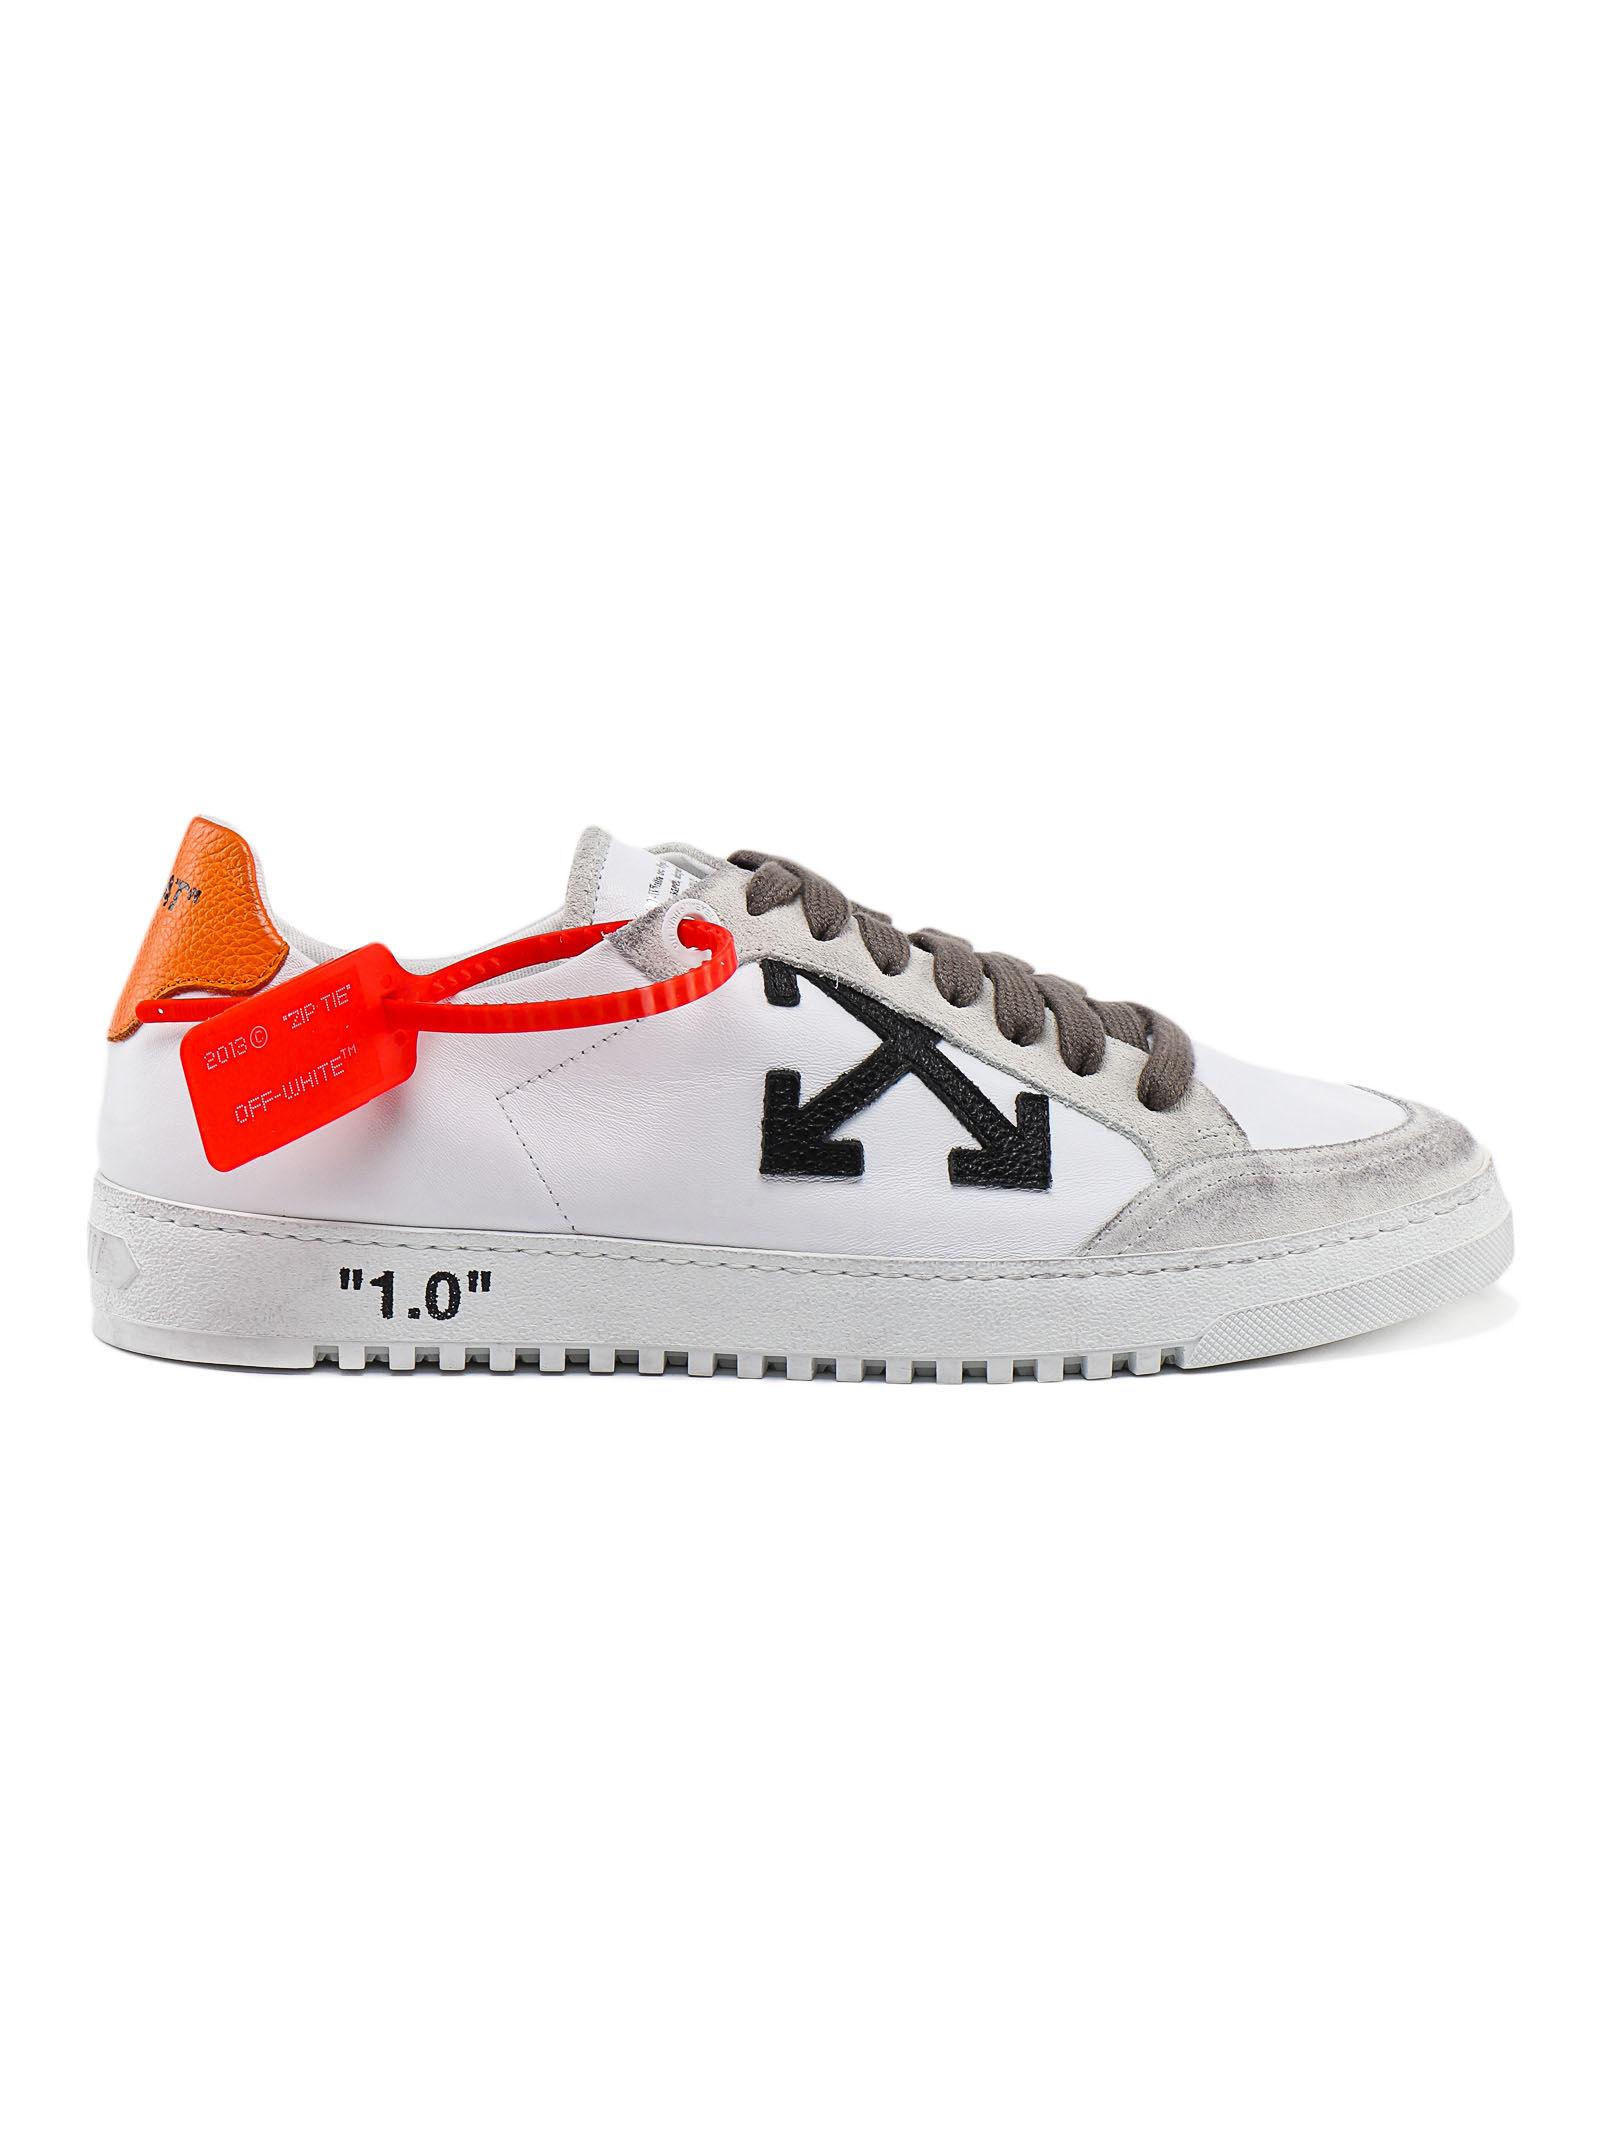 orange off white sneakers